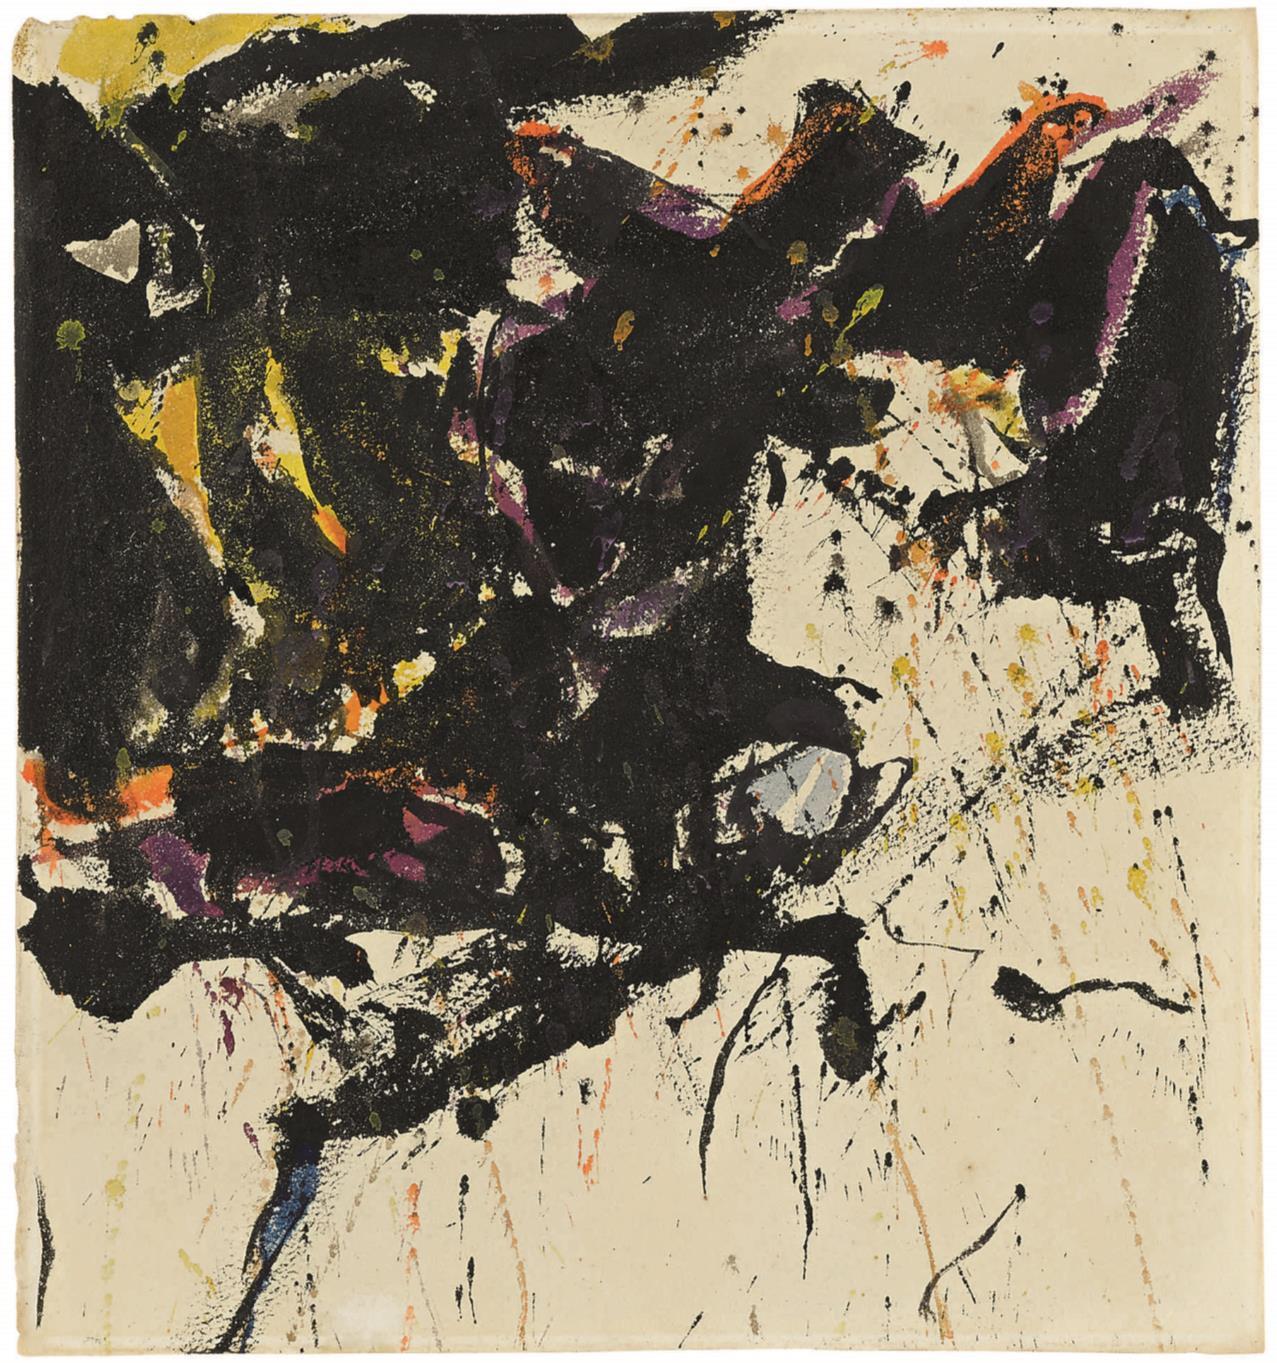 The Yellow and Black Square (1959), [SF58-133], Abstraktes Gemälde von Sam Francis